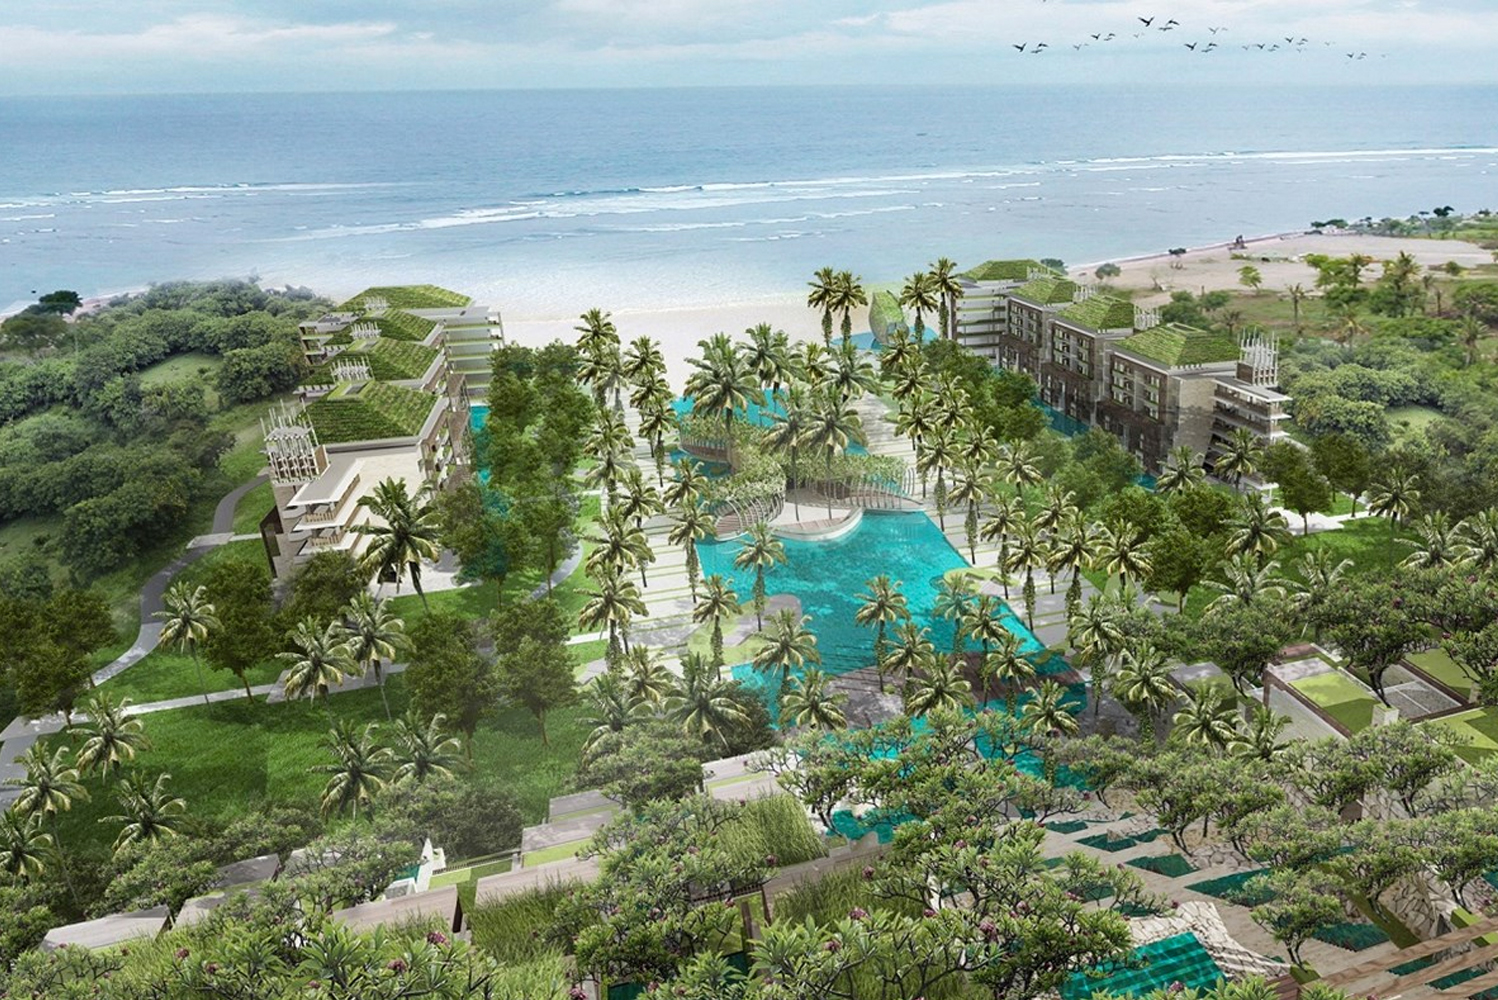 Kempinski Hotels opened The Apurva Kempinski Bali in the upmarket Nusa Dua area of Bali Indonesia 